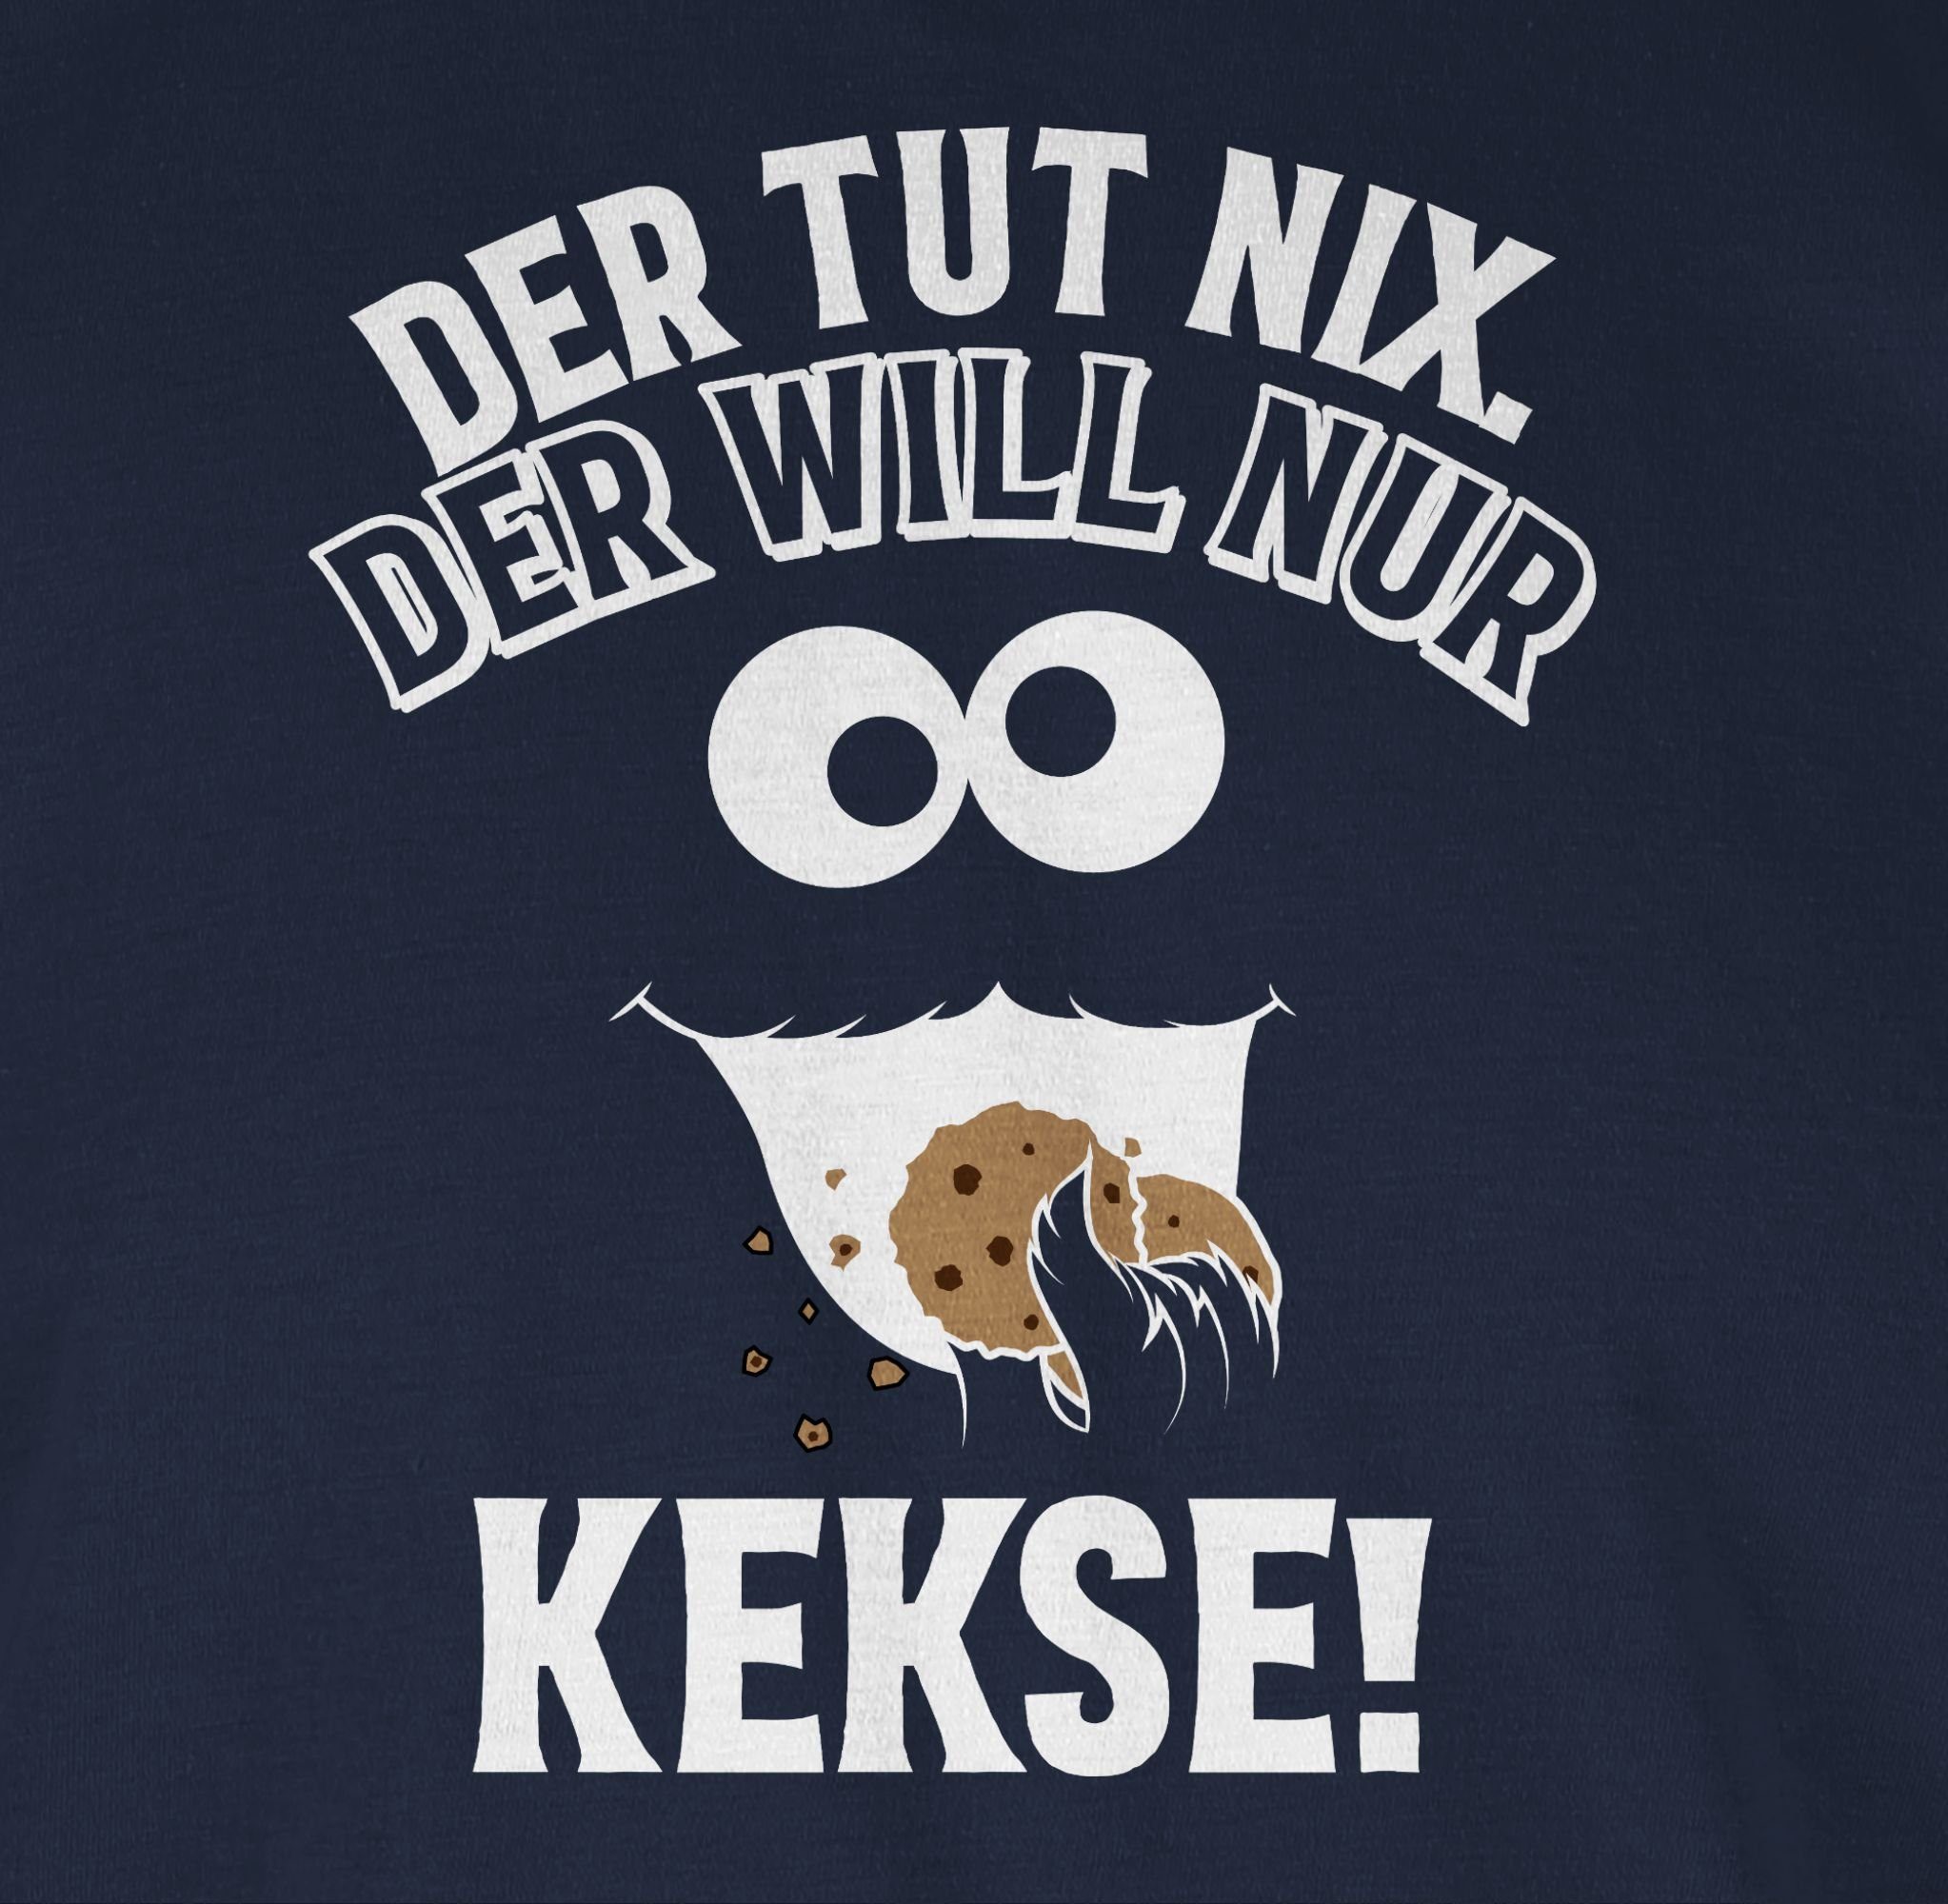 Kekse! nix. T-Shirt Keksmons Navy Der will Outfit Der Shirtracer nur Blau tut Monster 03 Krümelmonster Cookie Karneval